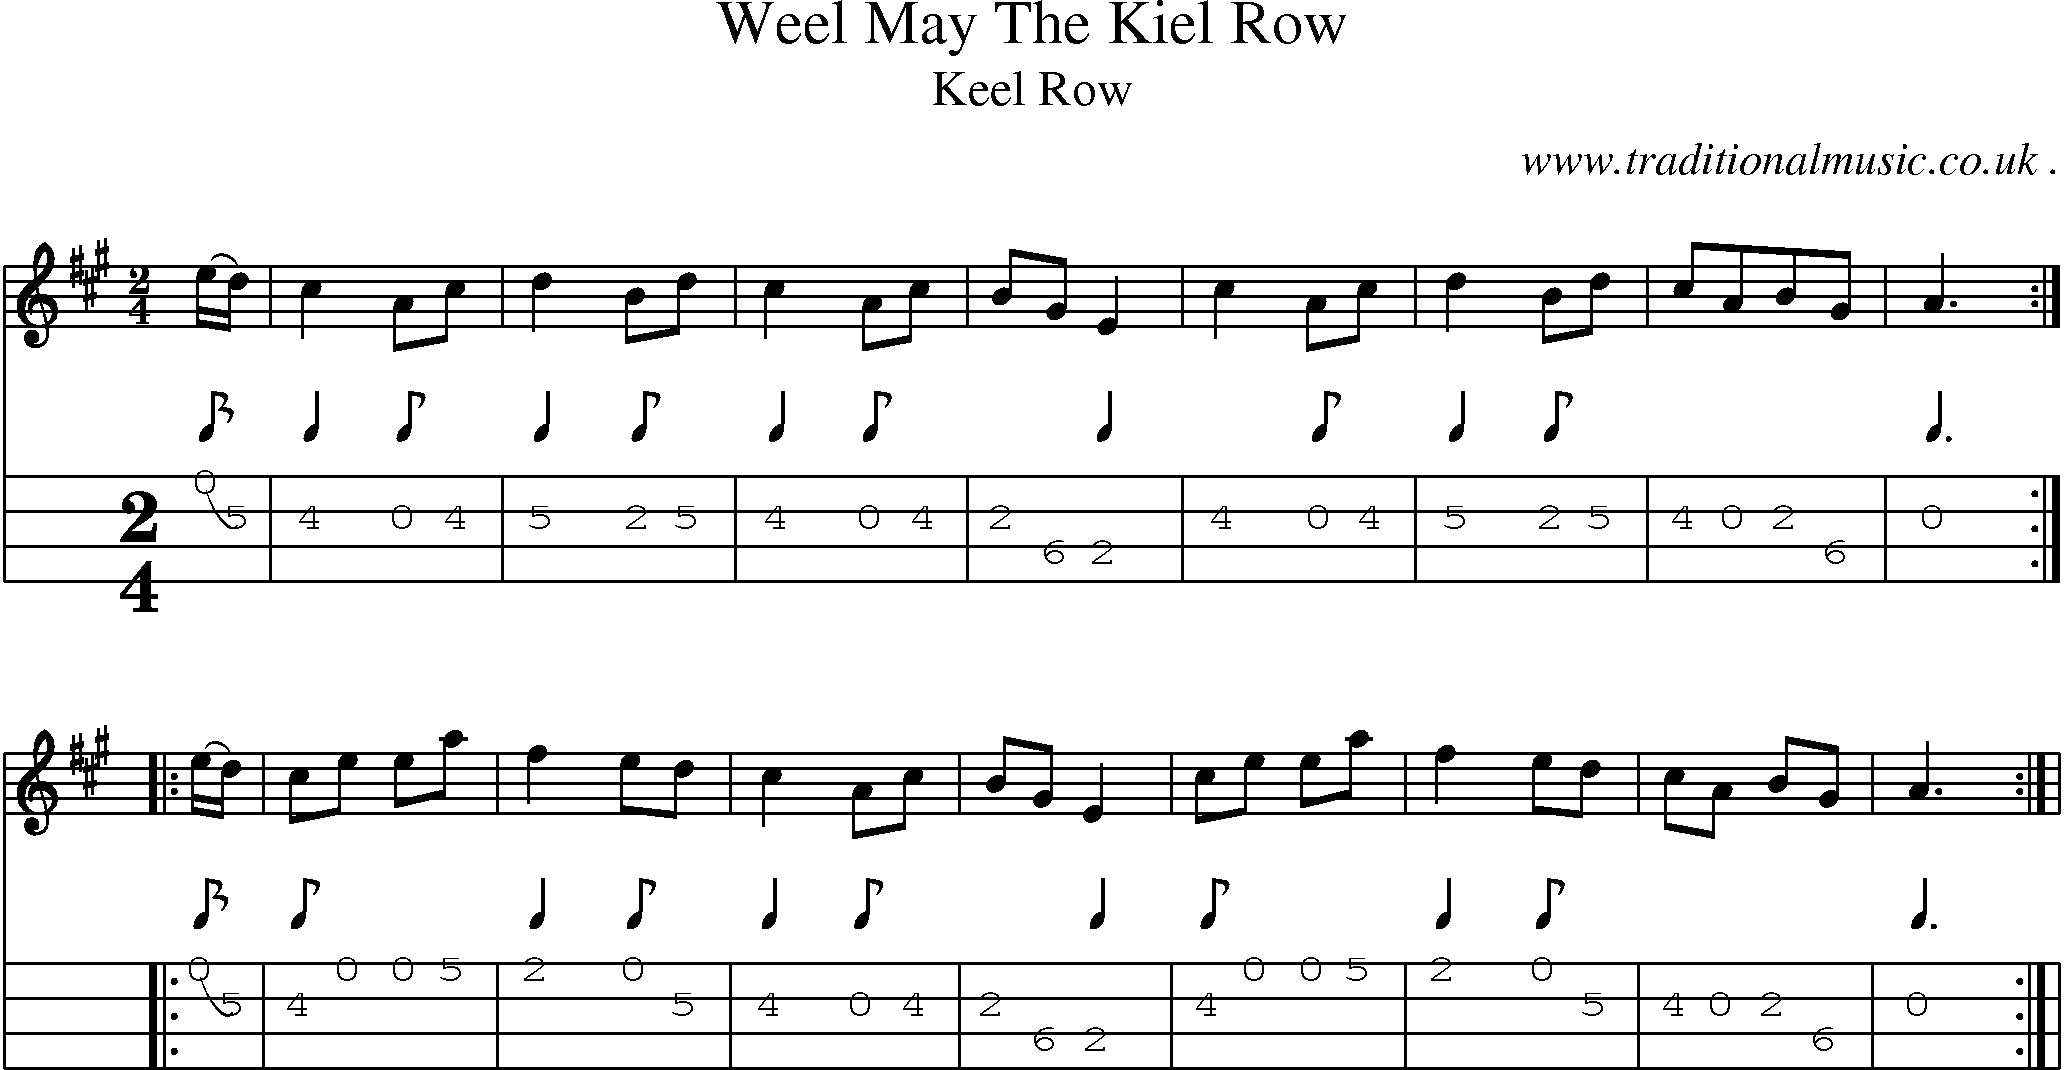 Sheet-Music and Mandolin Tabs for Weel May The Kiel Row